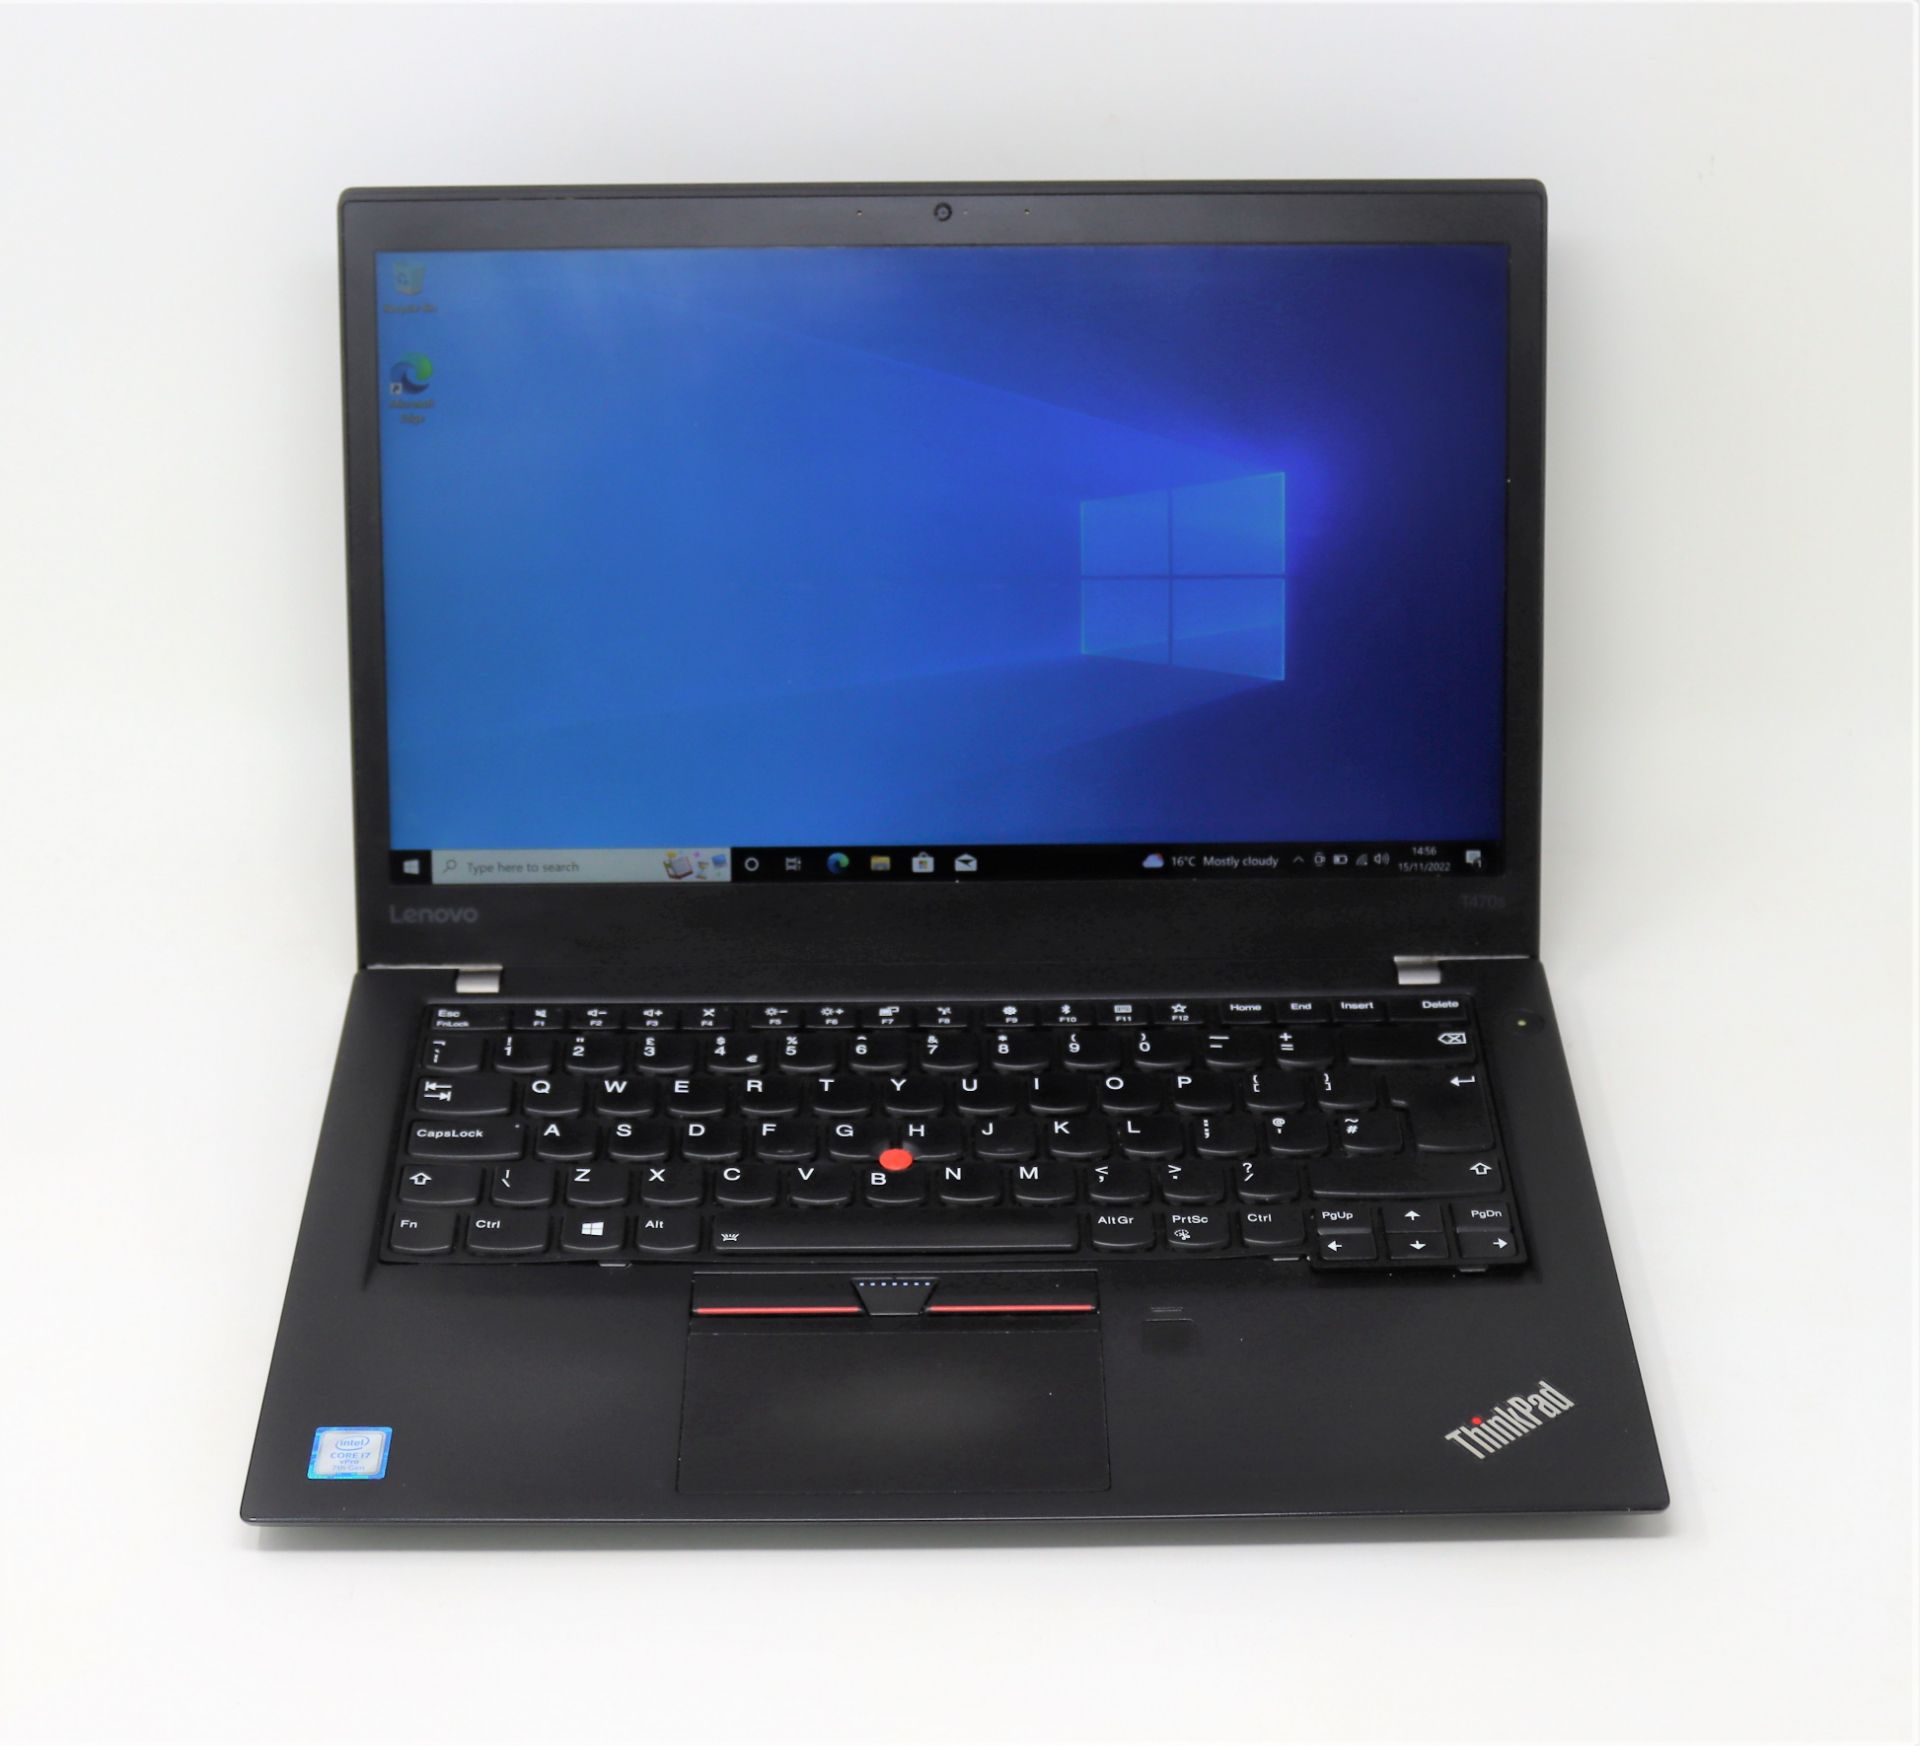 A pre-owned Lenovo ThinkPad T470s 14" Laptop with Intel Core i7-7600U CPU, 16GB RAM, 512GB SSD runni